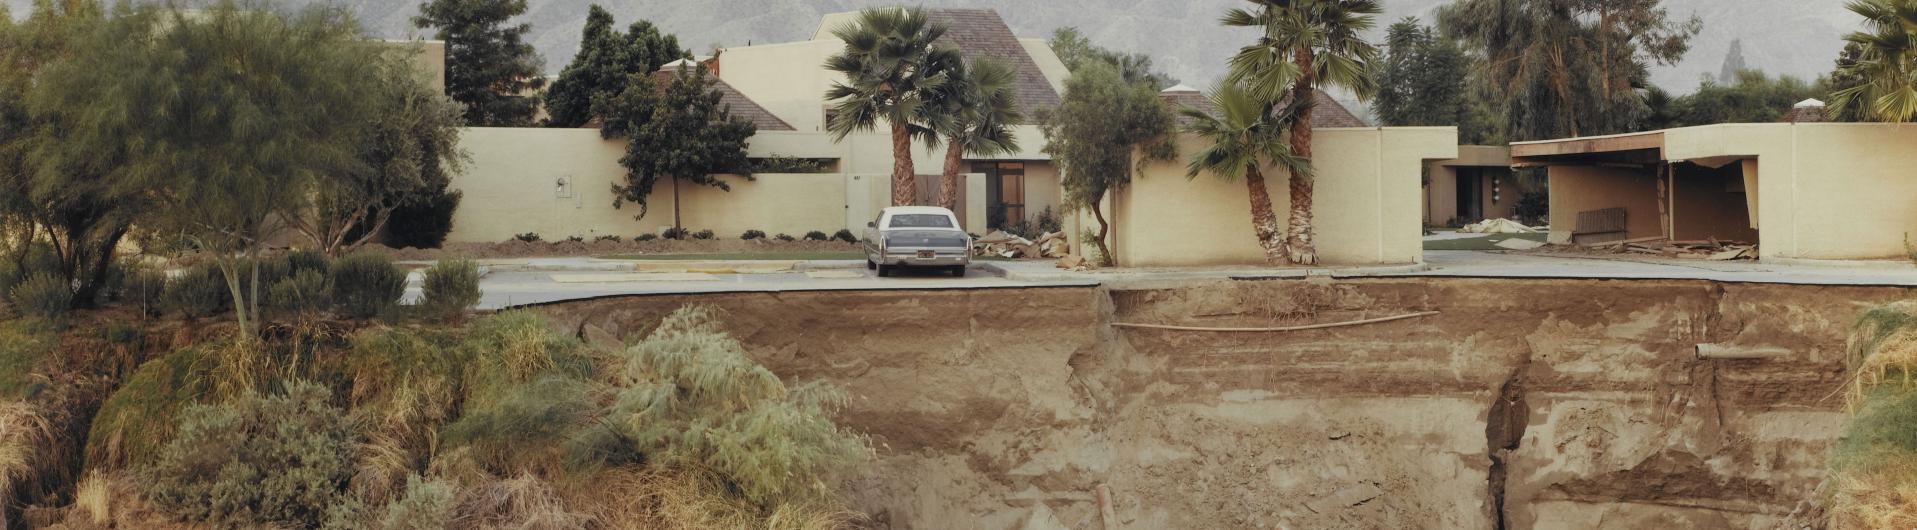 Joel Sternfeld, After a flash flood, Rancho Mirage, California July 1979